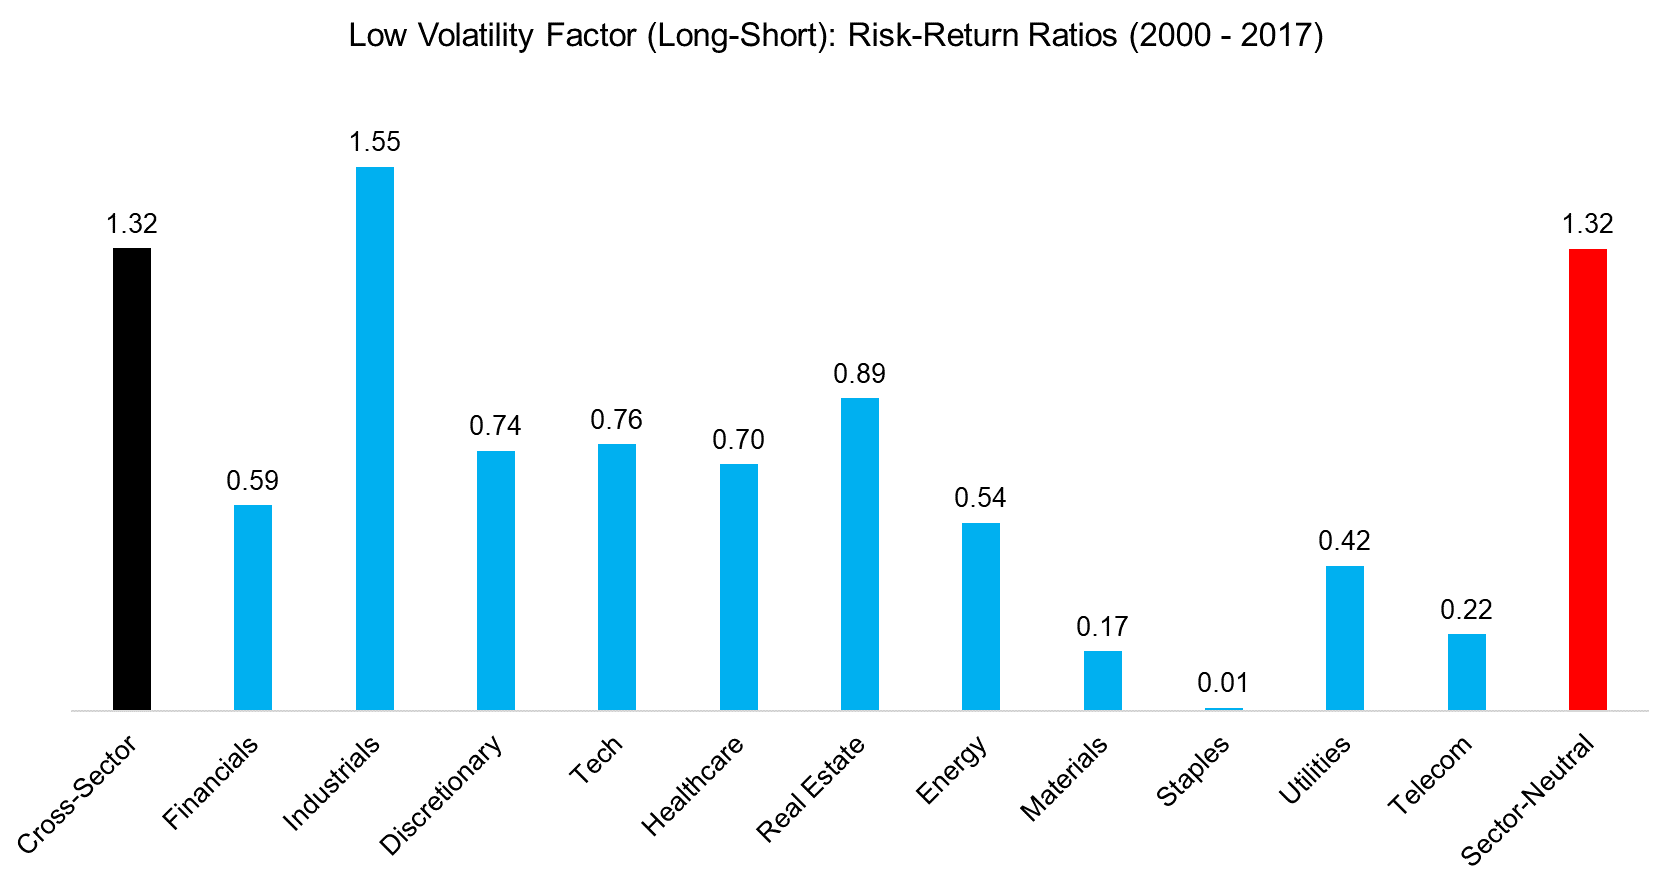 Low Volatility Factor (Long-Short) Risk-Return Ratios (2000 - 2017)